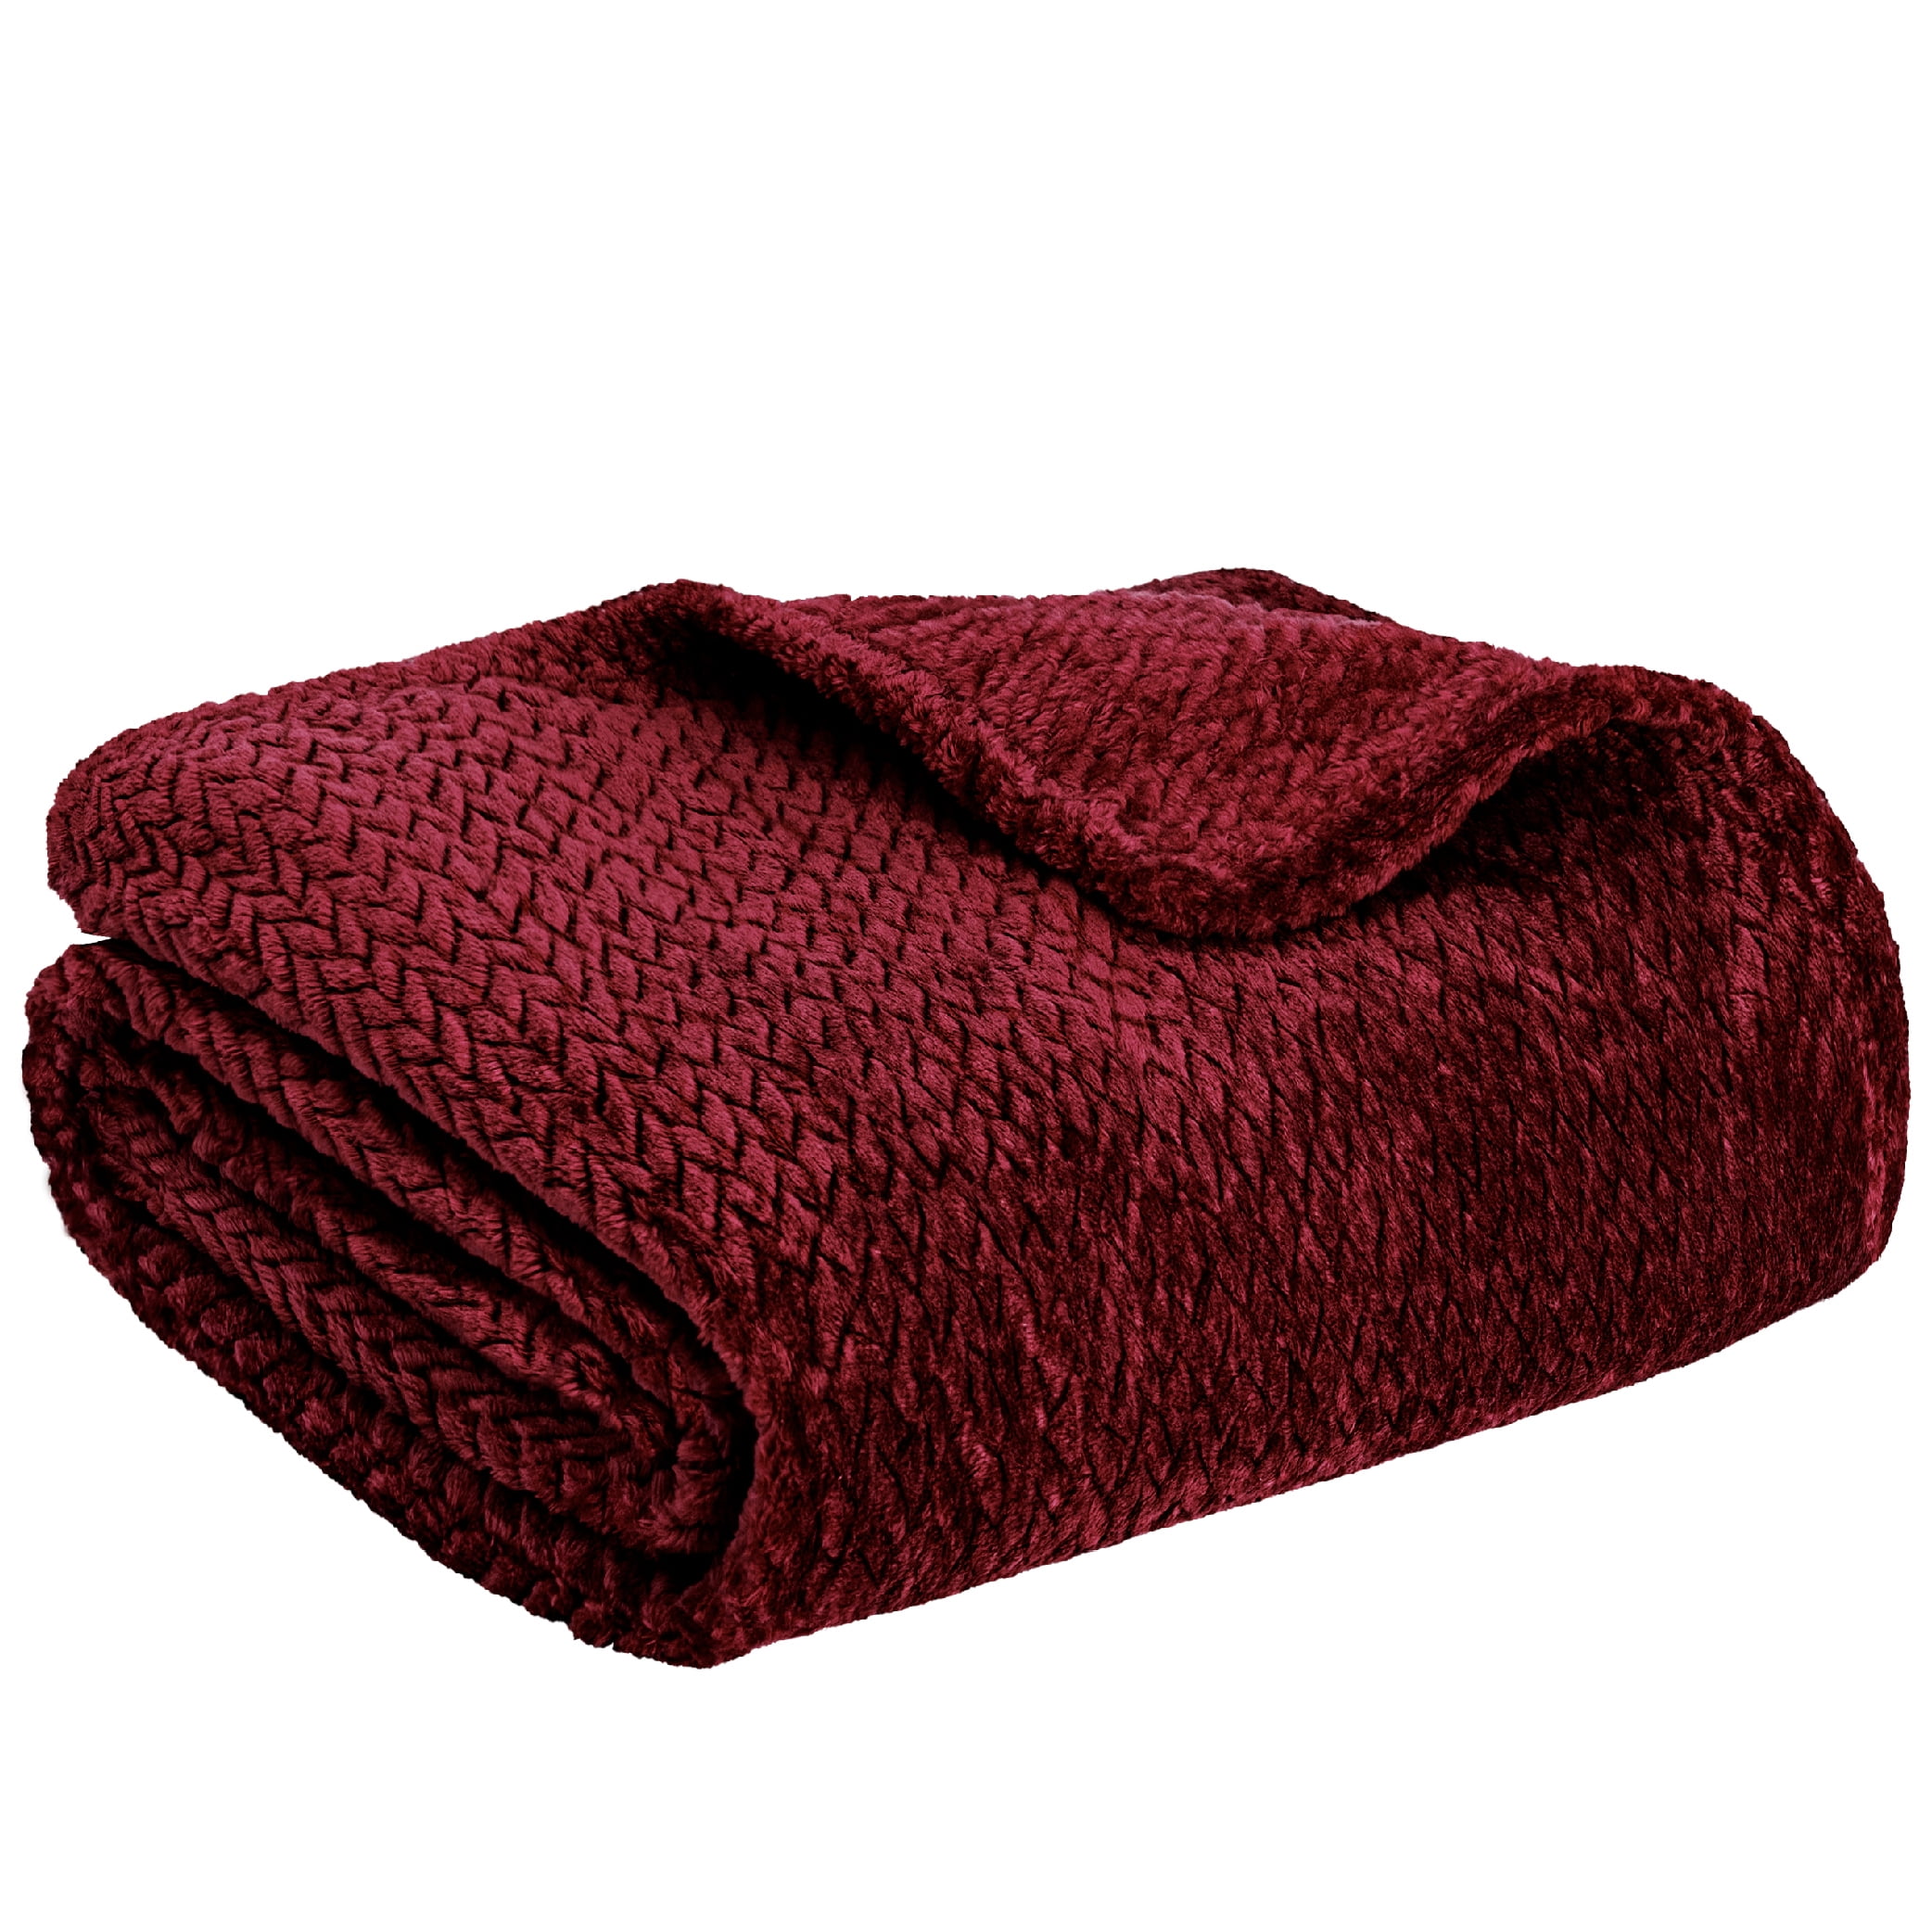 The Comfy Blanket Sweatshirt - Burgundy, 1 ct - Fry's Food Stores